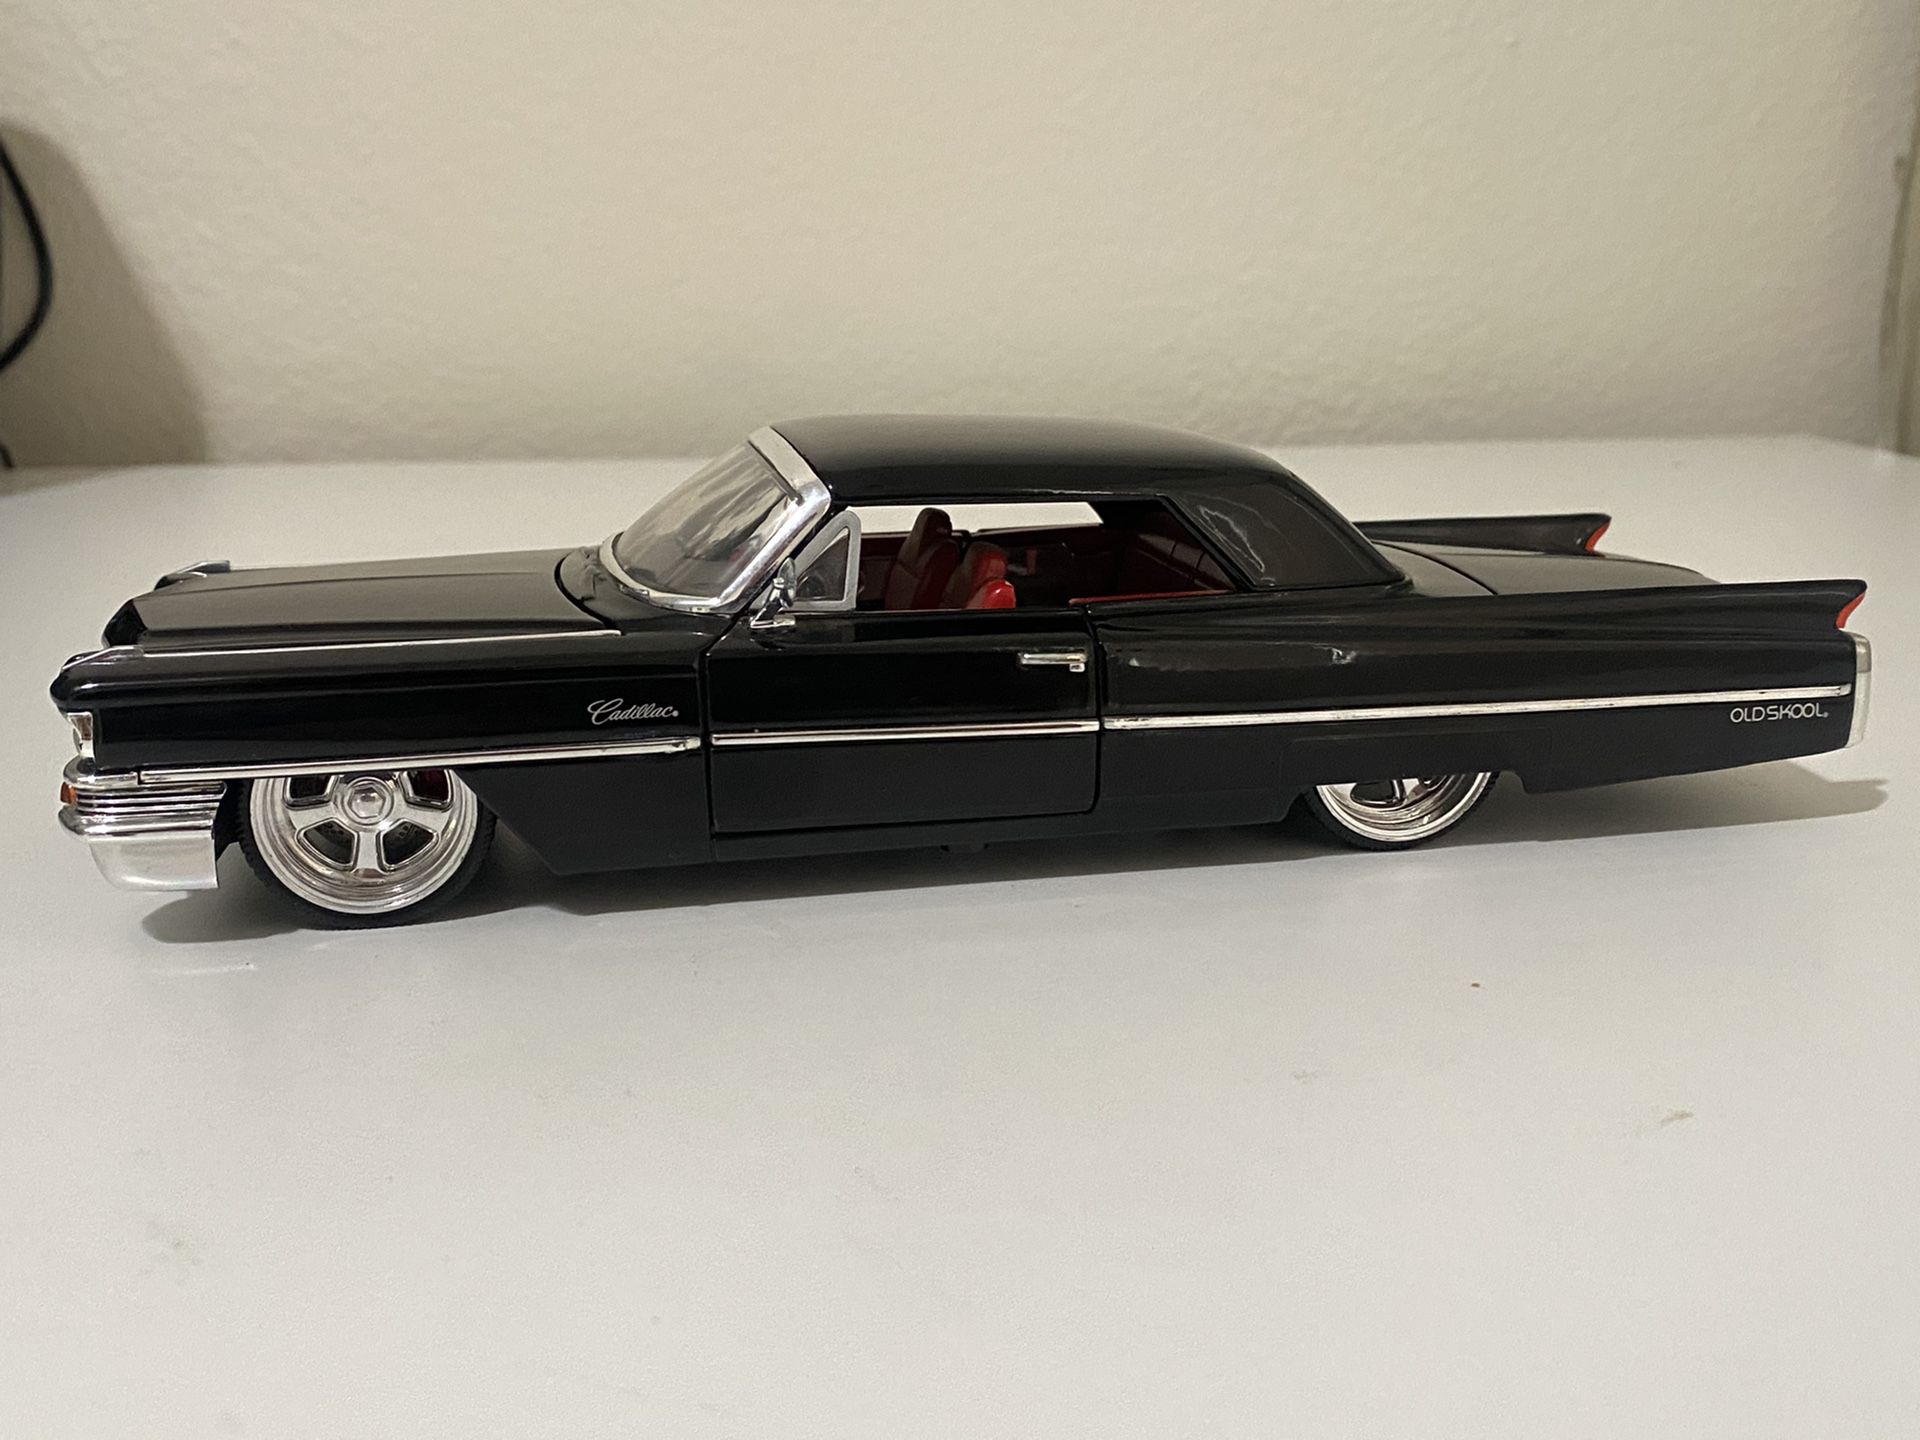 Diecast model 1963 Cadillac Series 62 Jada Toys 1:24